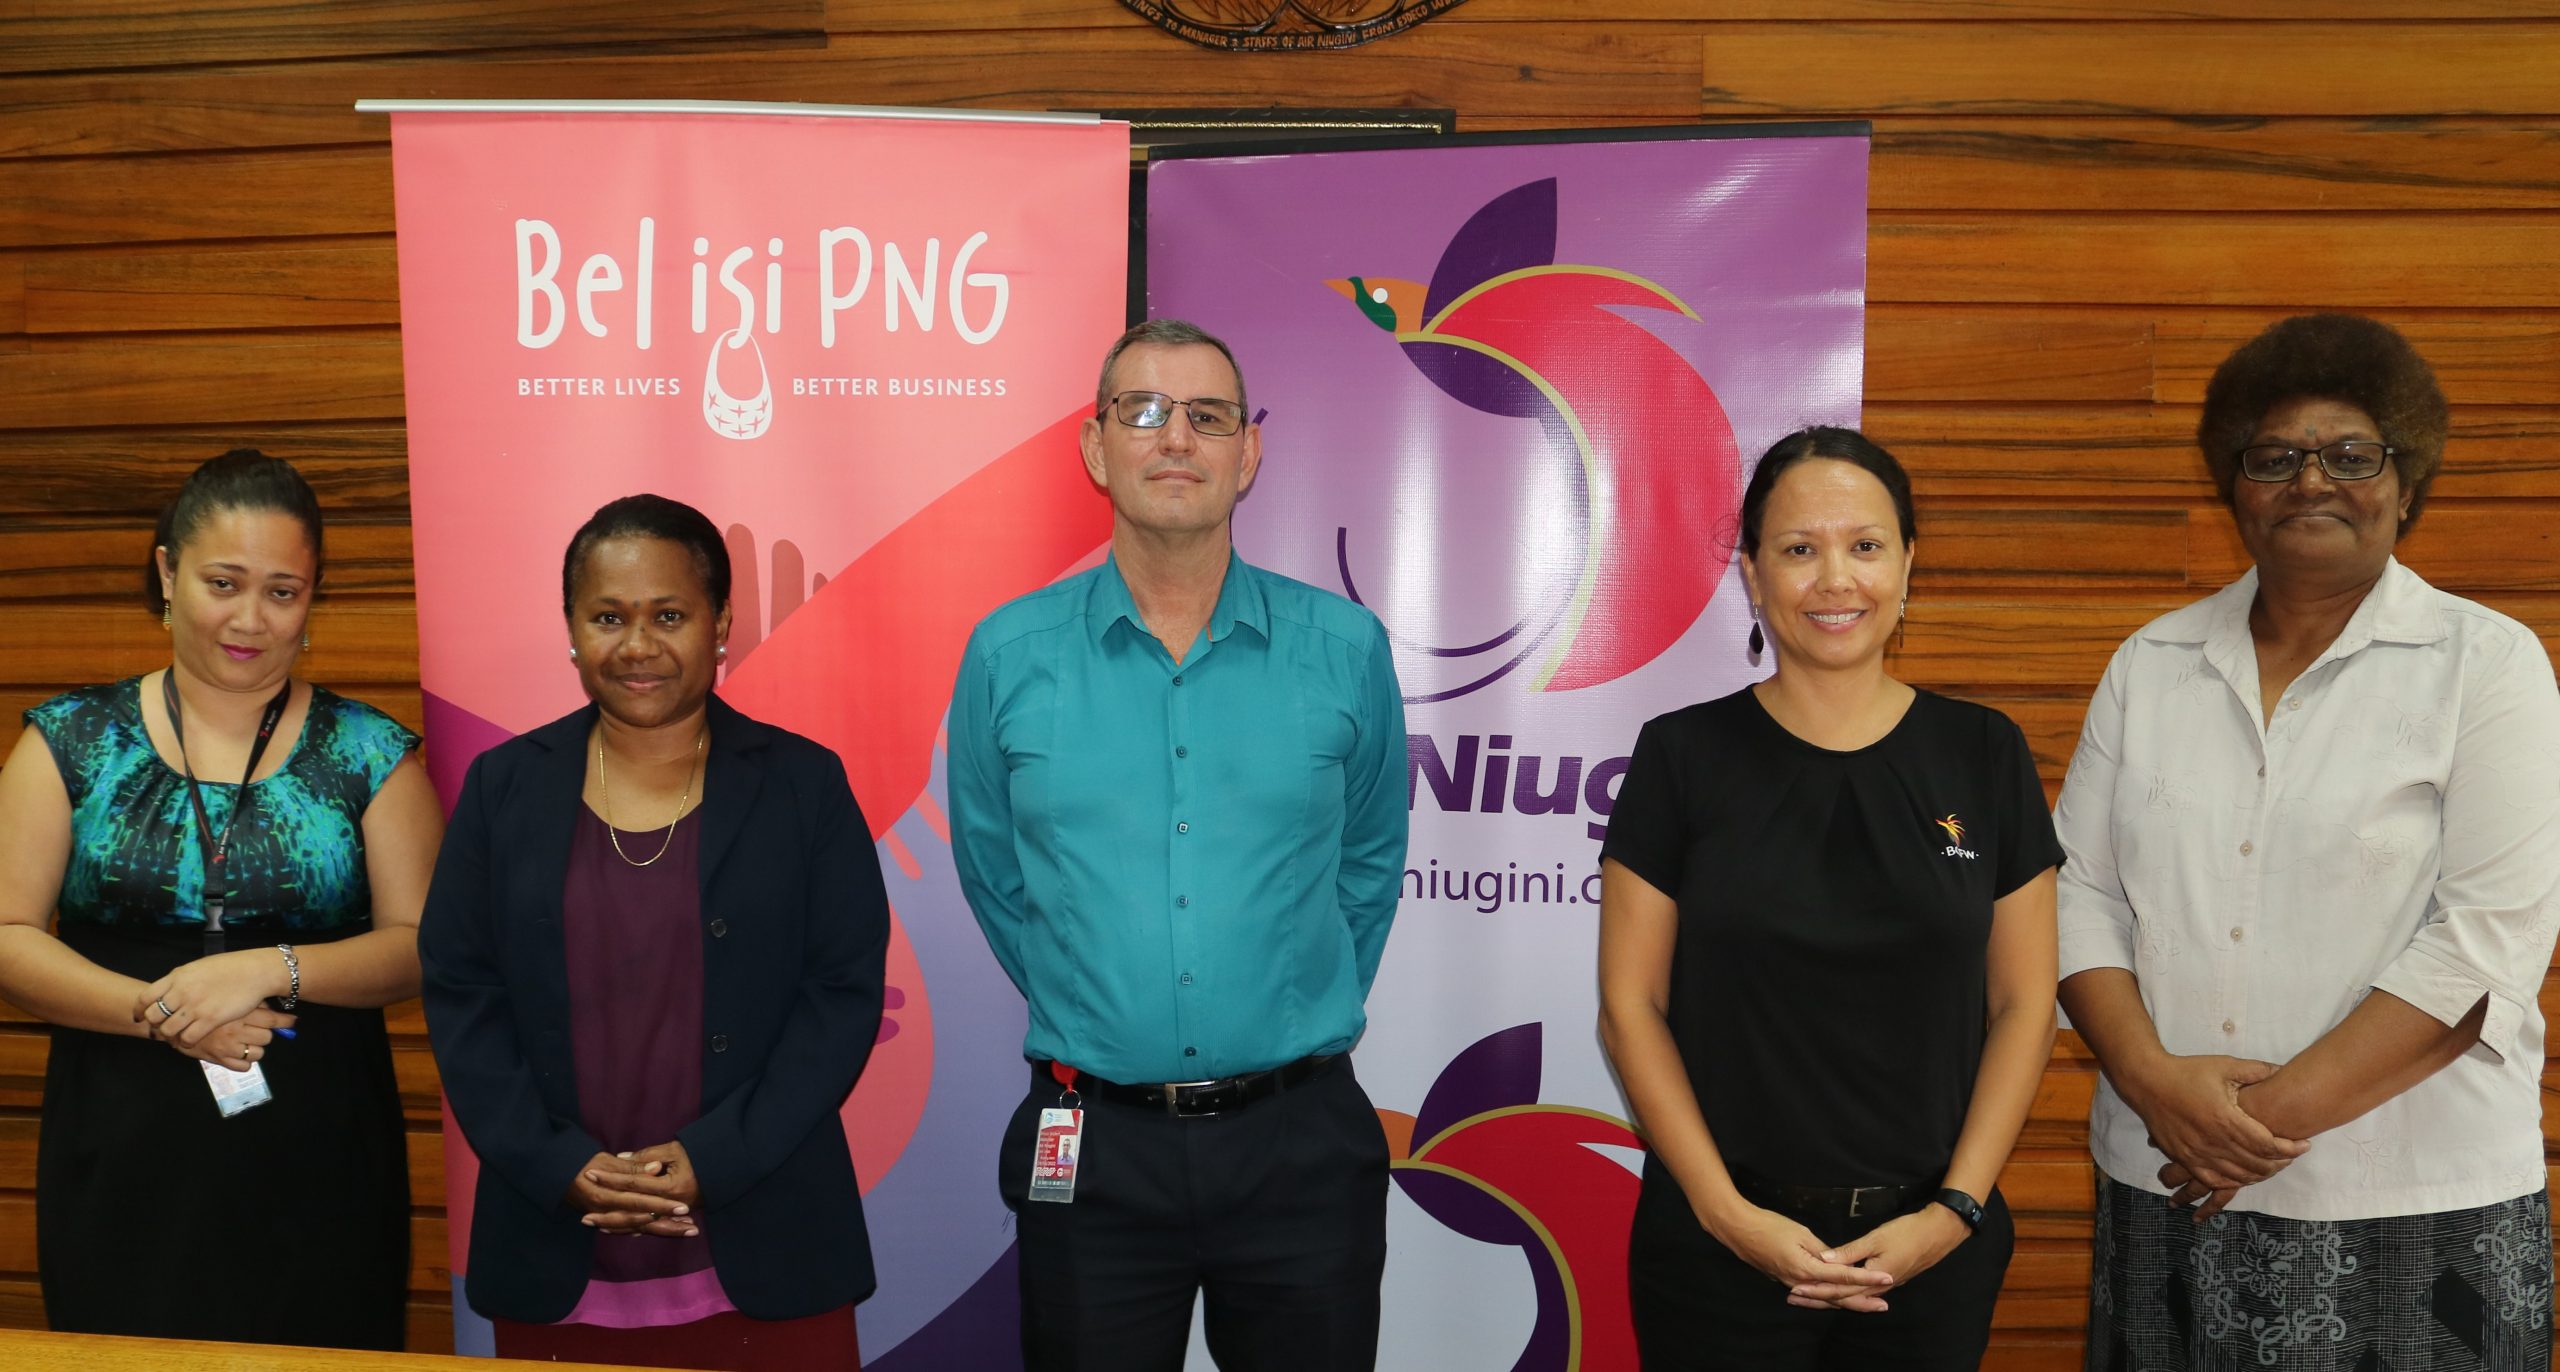 Air Niugini Announces Partnership With Bel Isi PNG